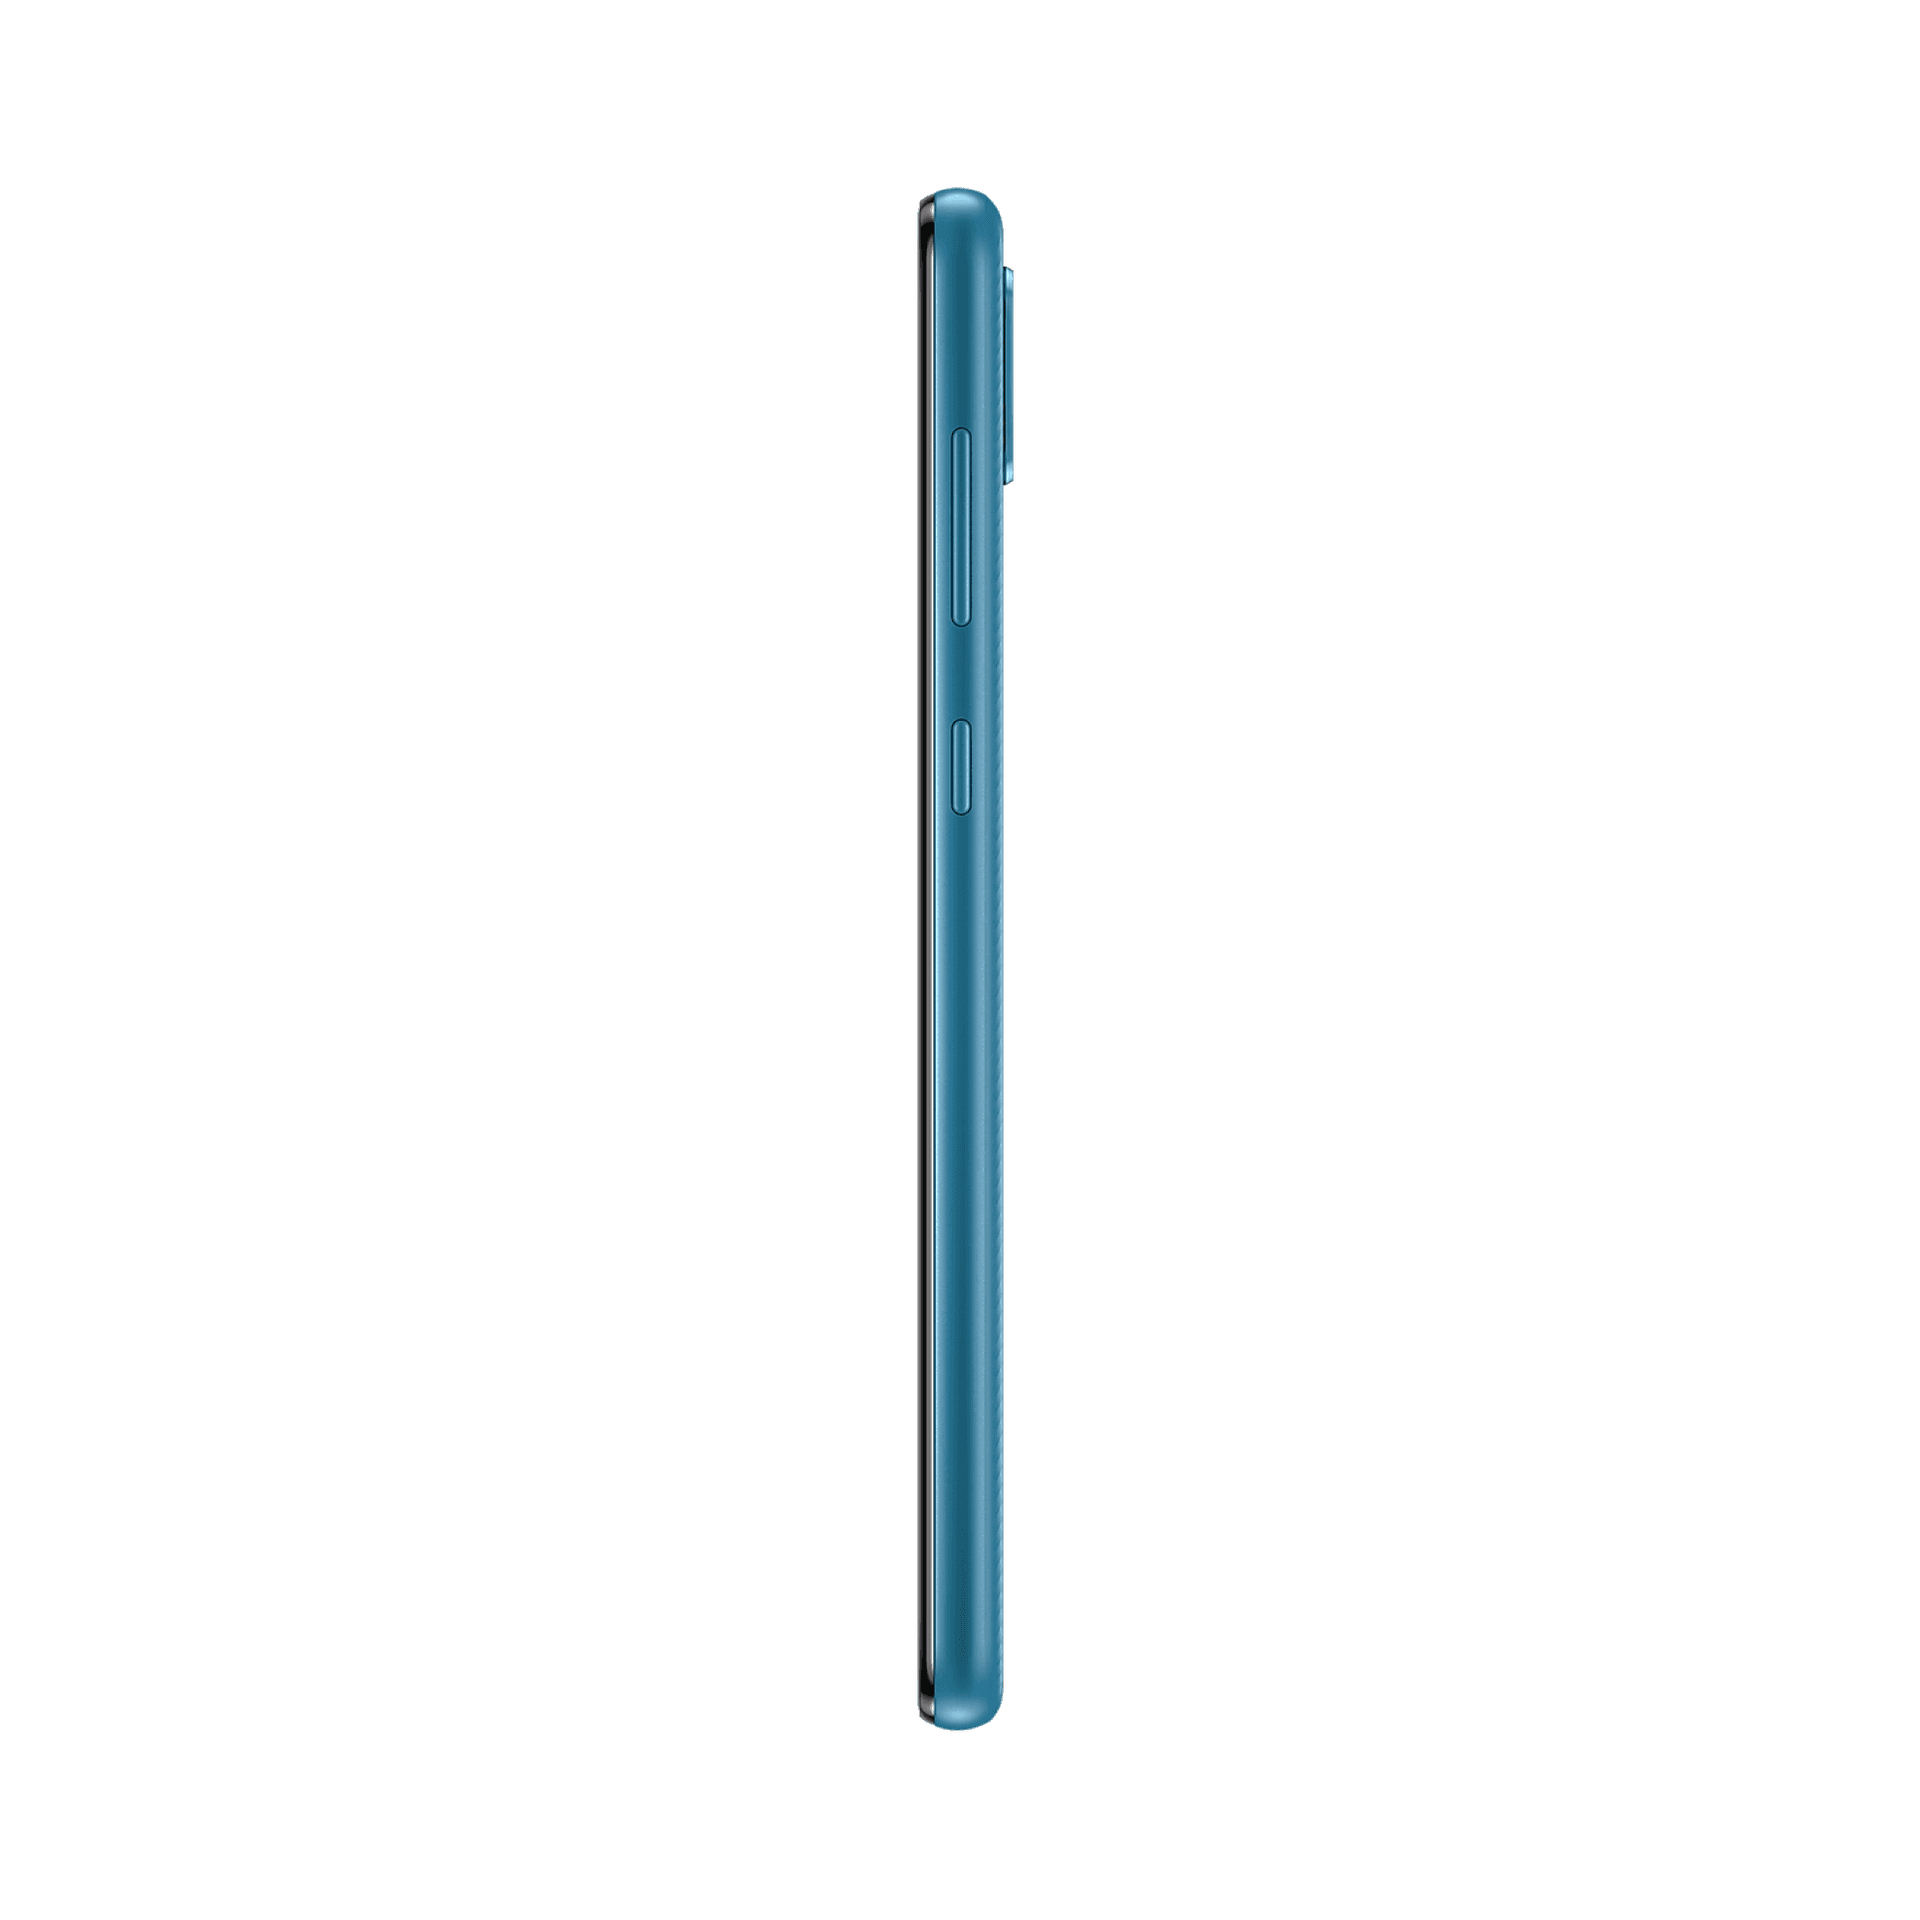 Samsung Galaxy A02 - 32 GB - Mavi